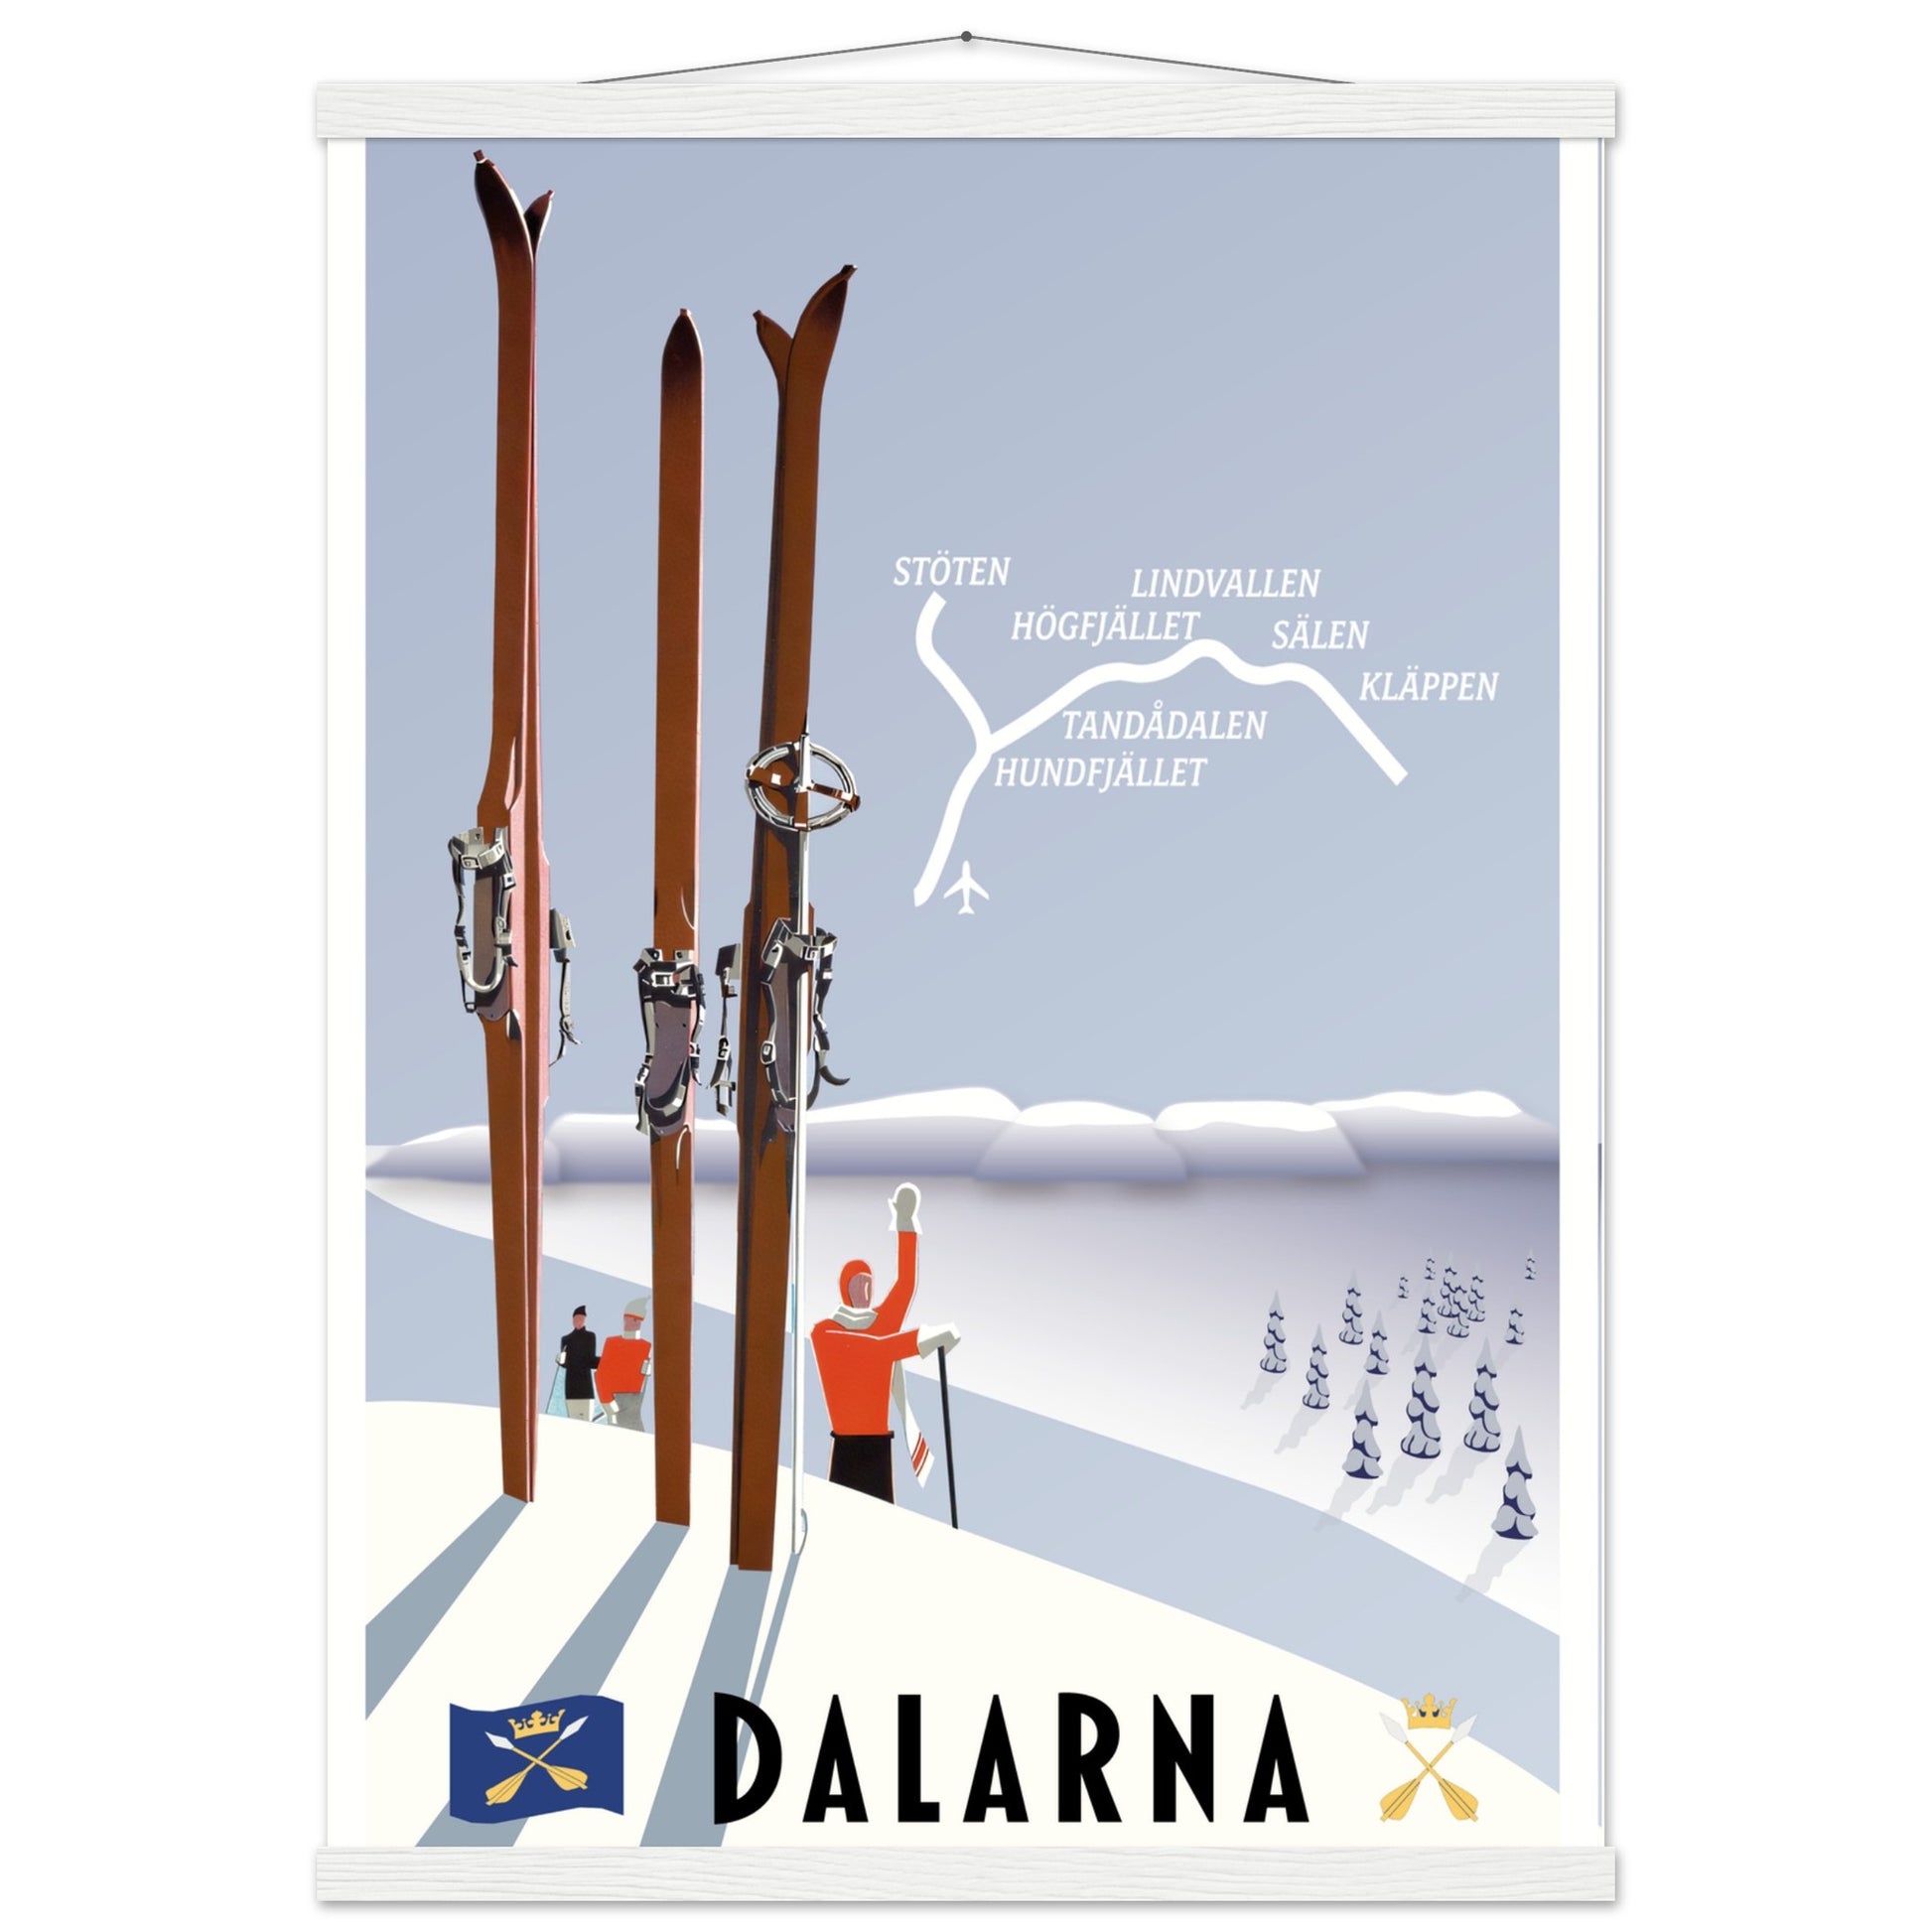 Vintage poster 'Dalarna' Sweden on Premium Matte Paper by Posterify Design - Posterify